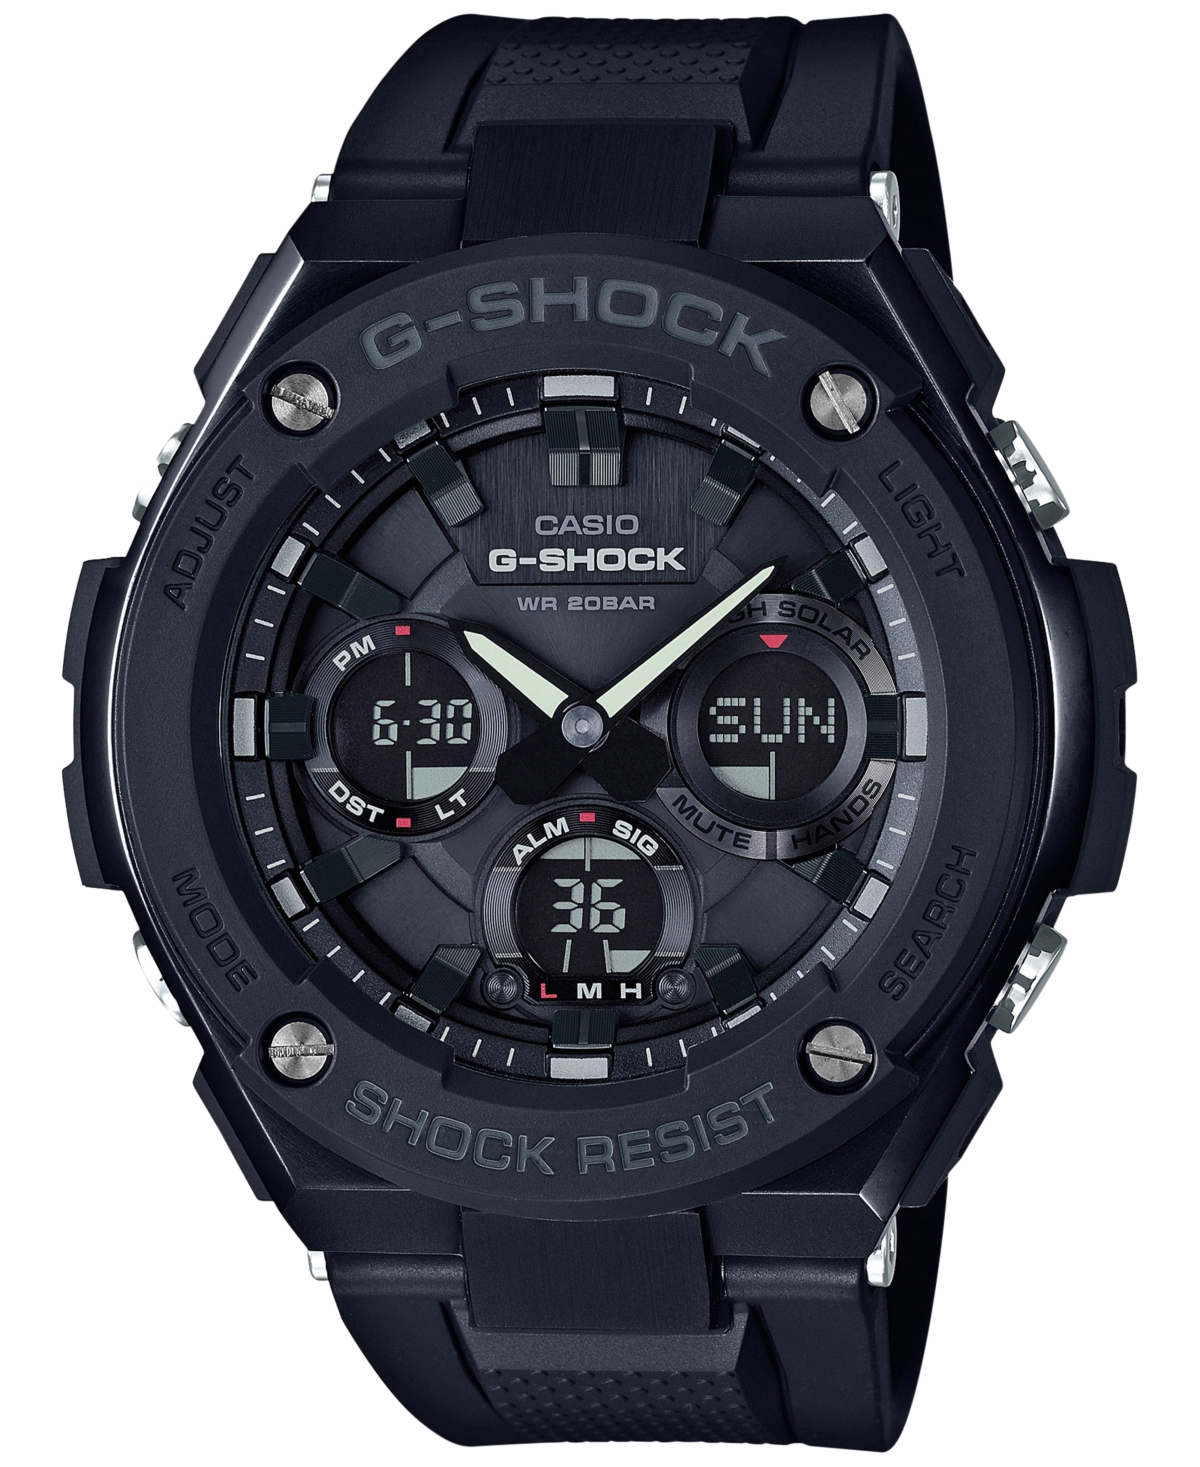 Men's Analog-Digital Black Ip with Black Resin Strap G-Steel Watch 51x53mm GSTS100G-1B - Black